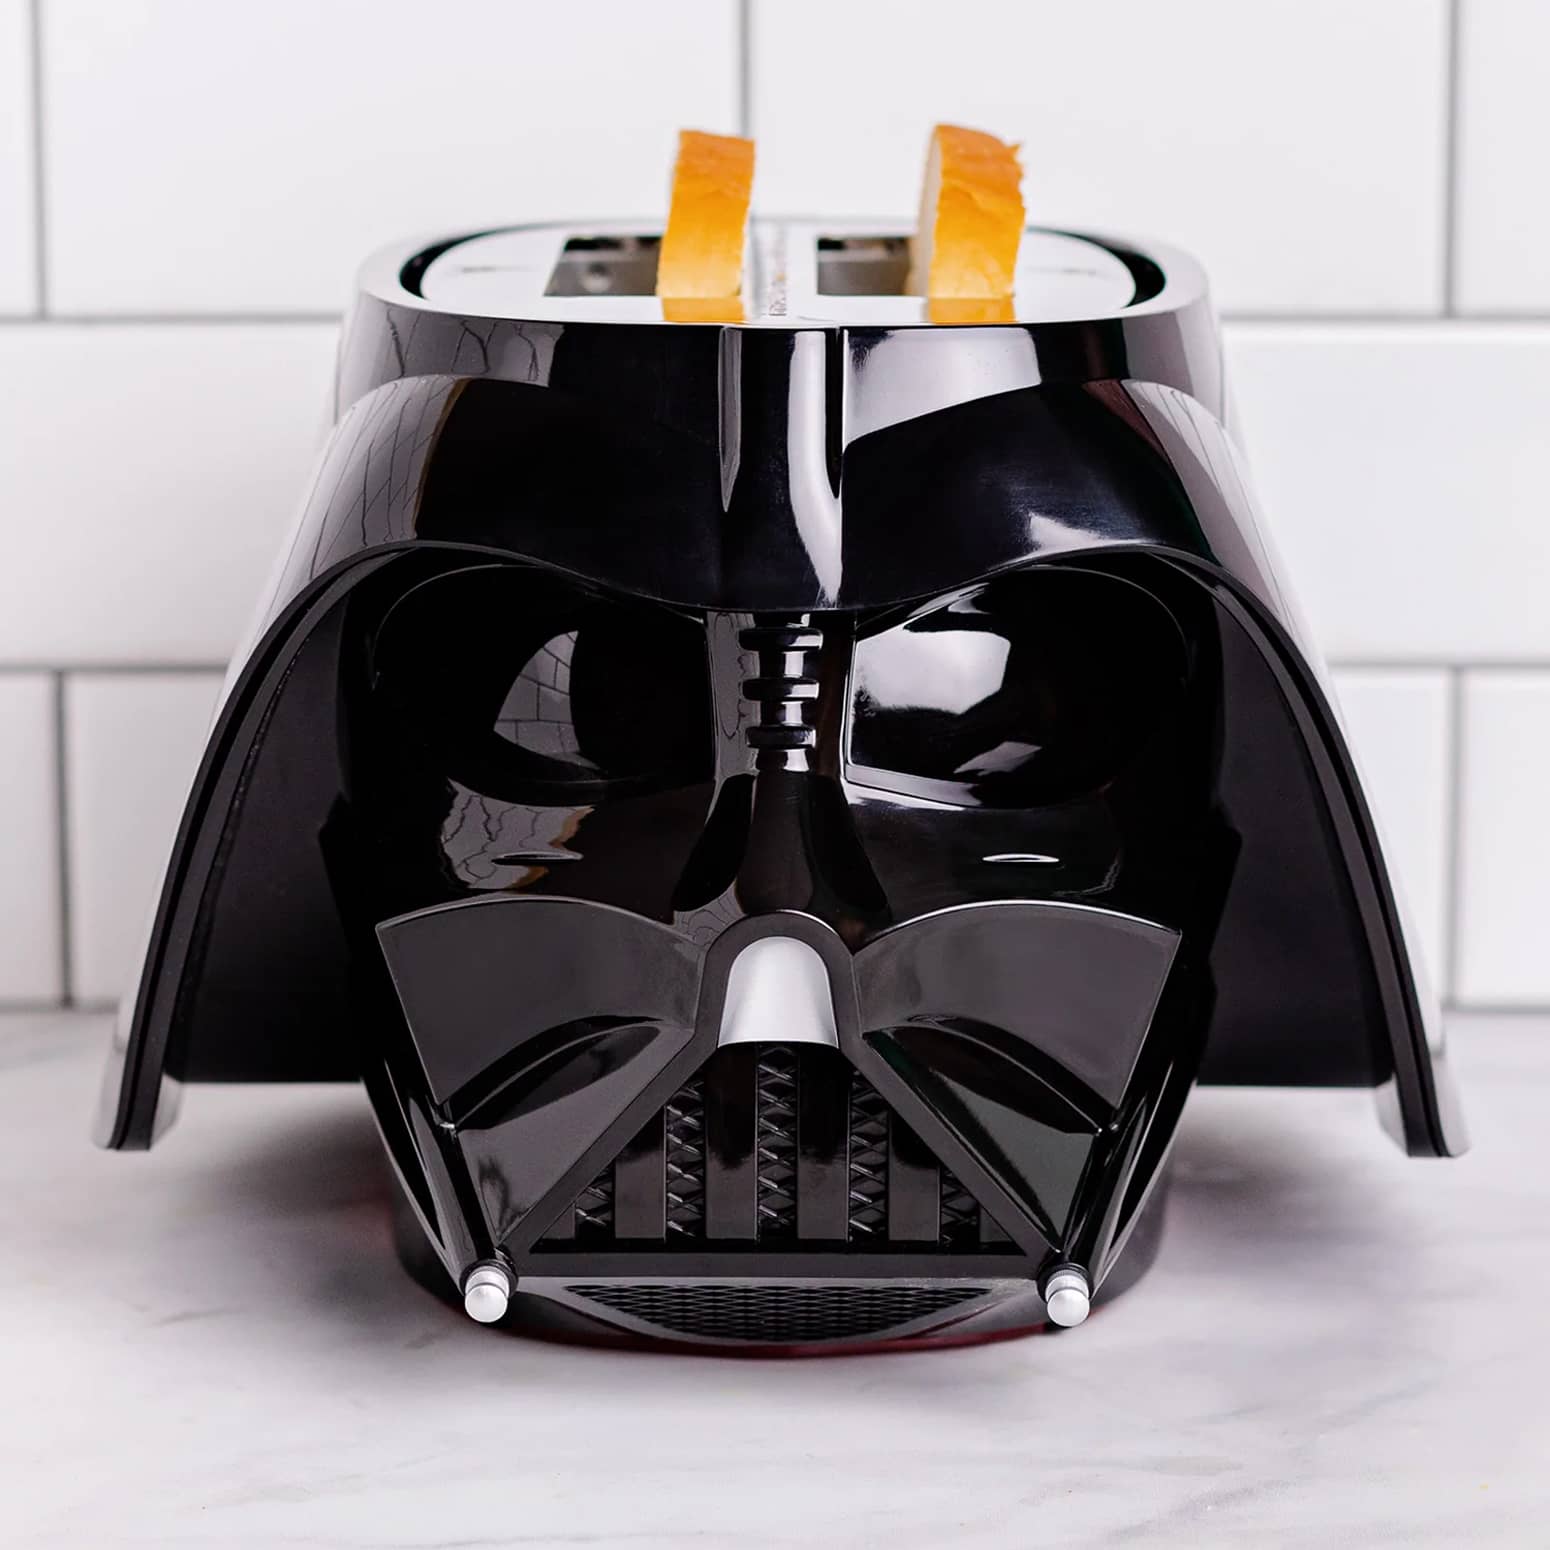 Star Wars Darth Vader Halo Toaster - Lights Up and Makes Sounds